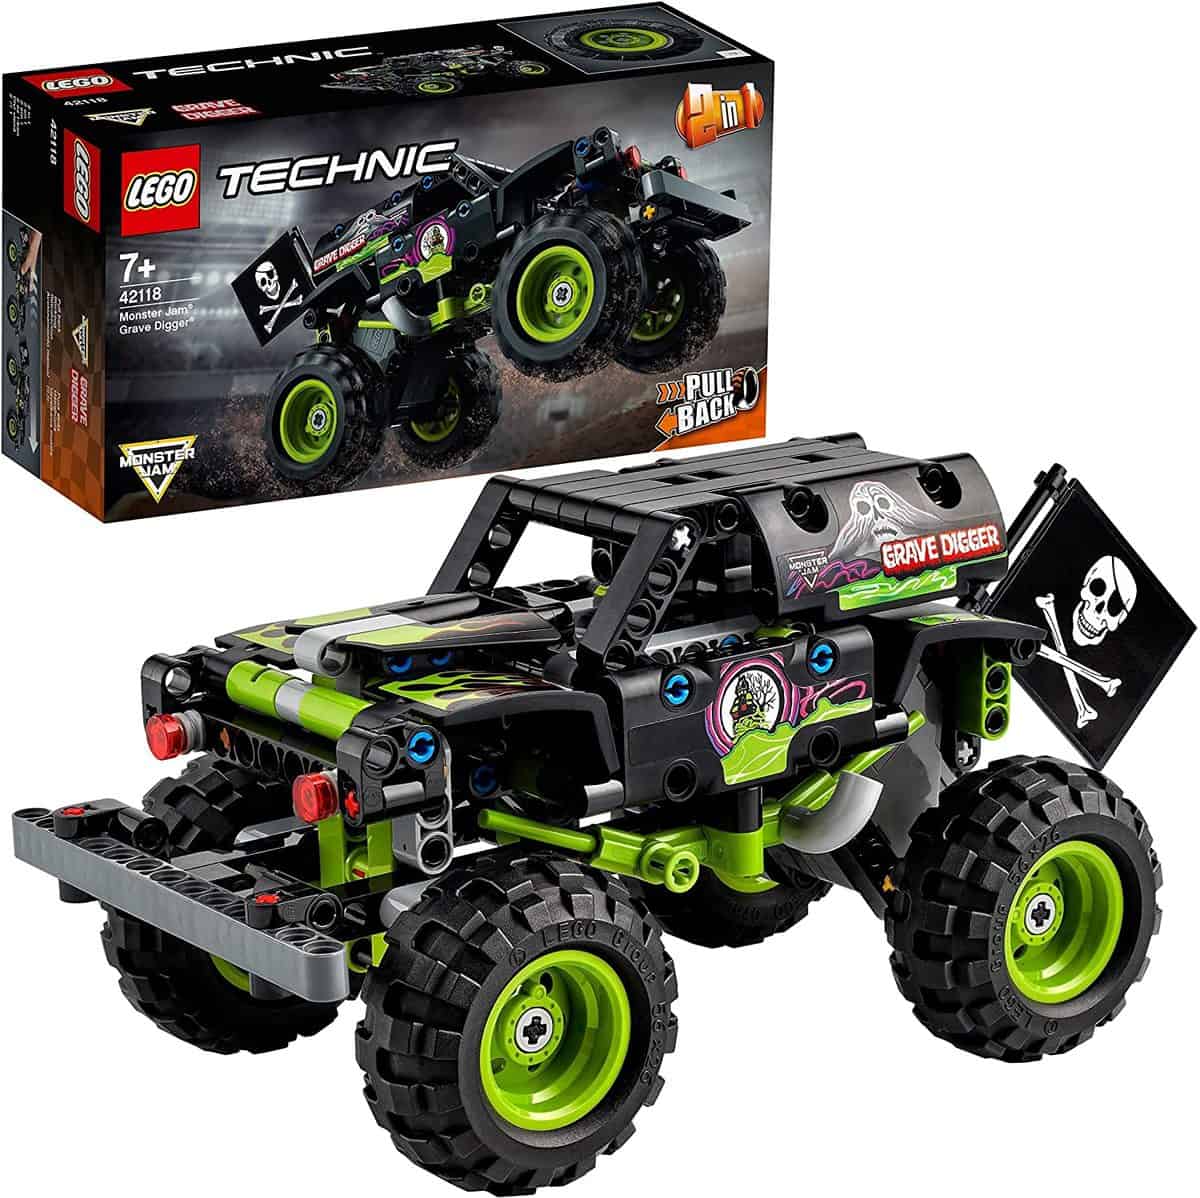 LEGO 42118 Technic Monster Jam Grave Digger Truck - Gelände-Buggy 2-in-1 Set - für 15,29 € [Prime] statt 19,99 €